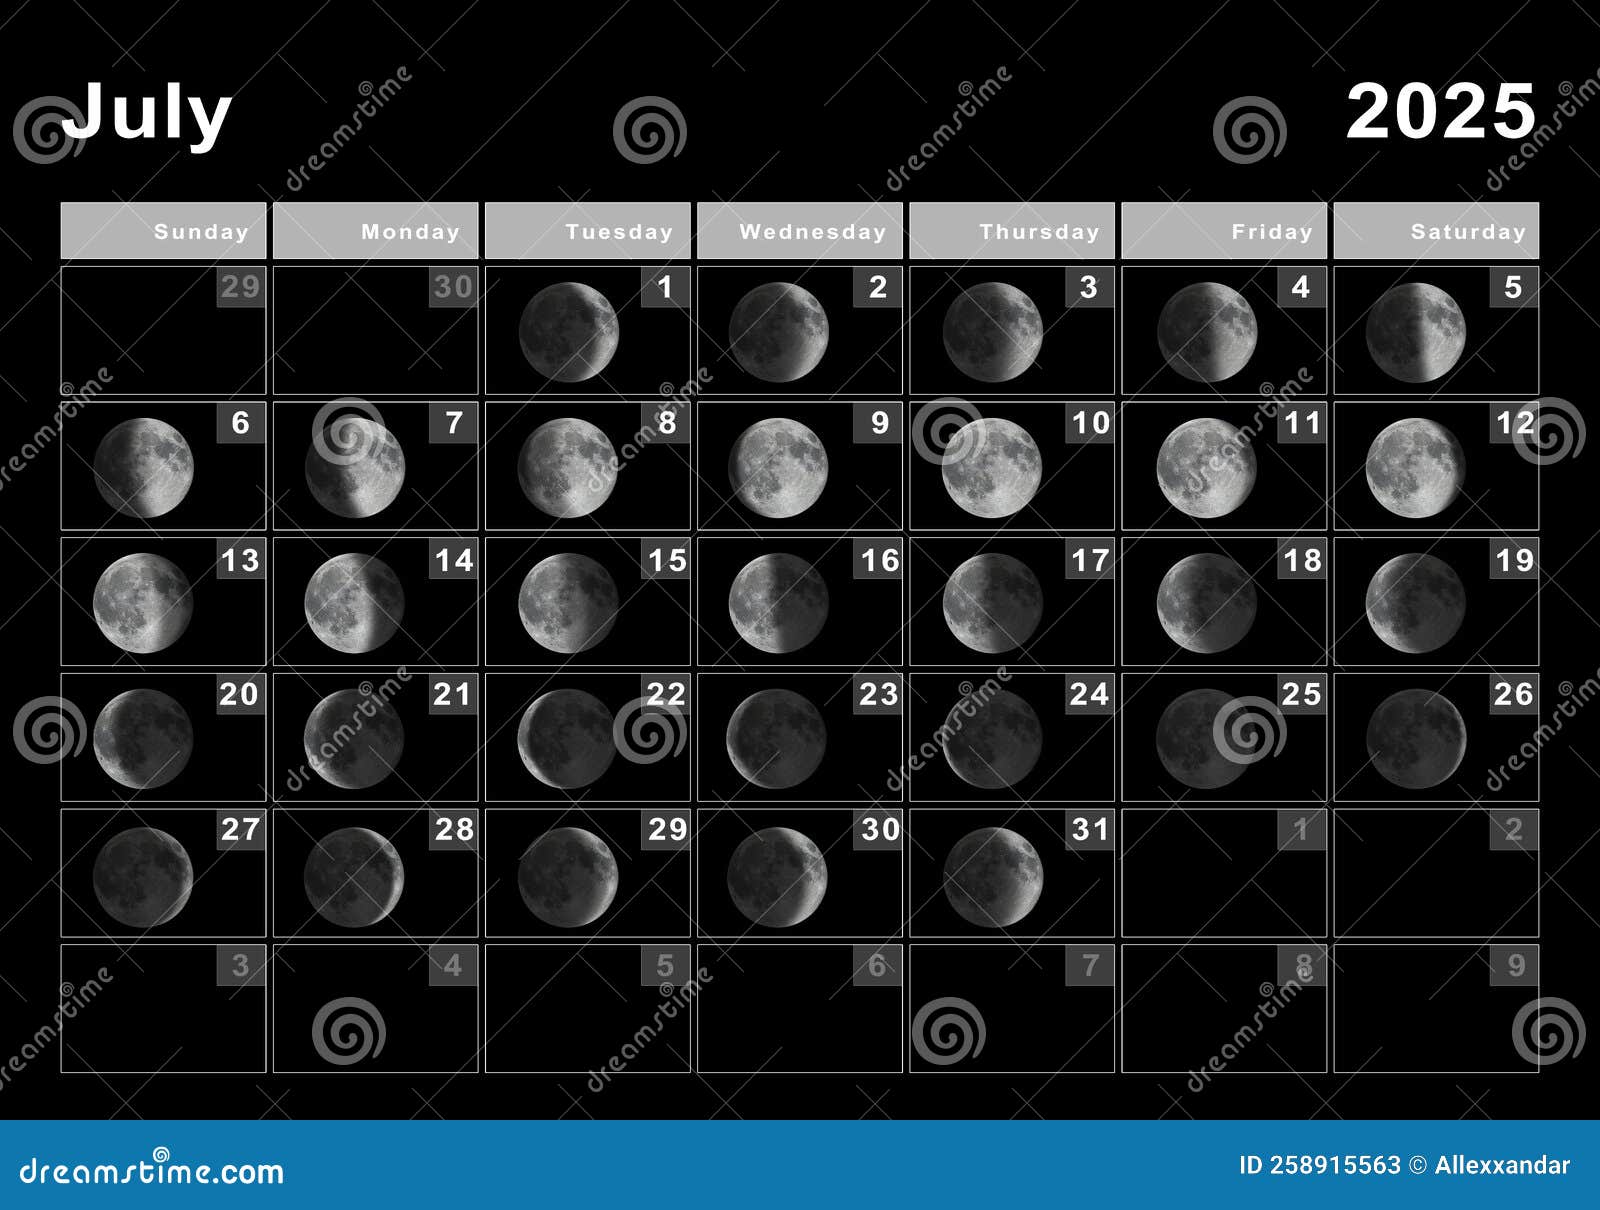 july-2025-lunar-calendar-moon-cycles-stock-illustration-illustration-of-galaxy-date-258915563